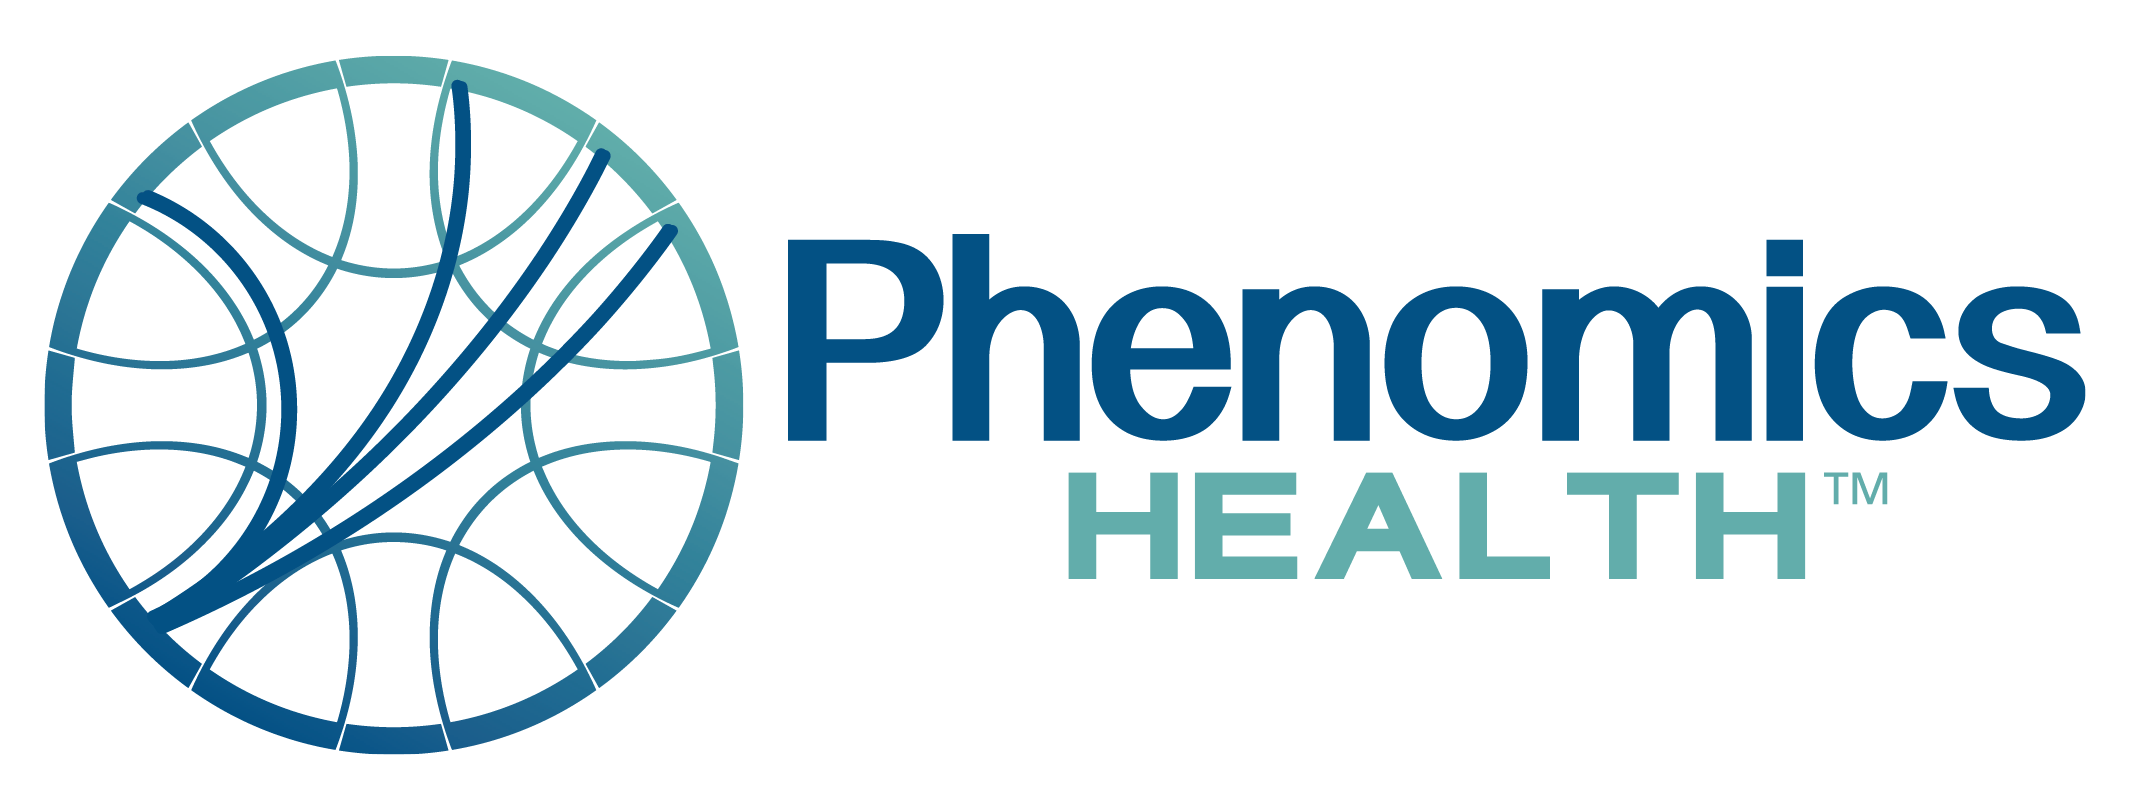 Phenomics Health Inc